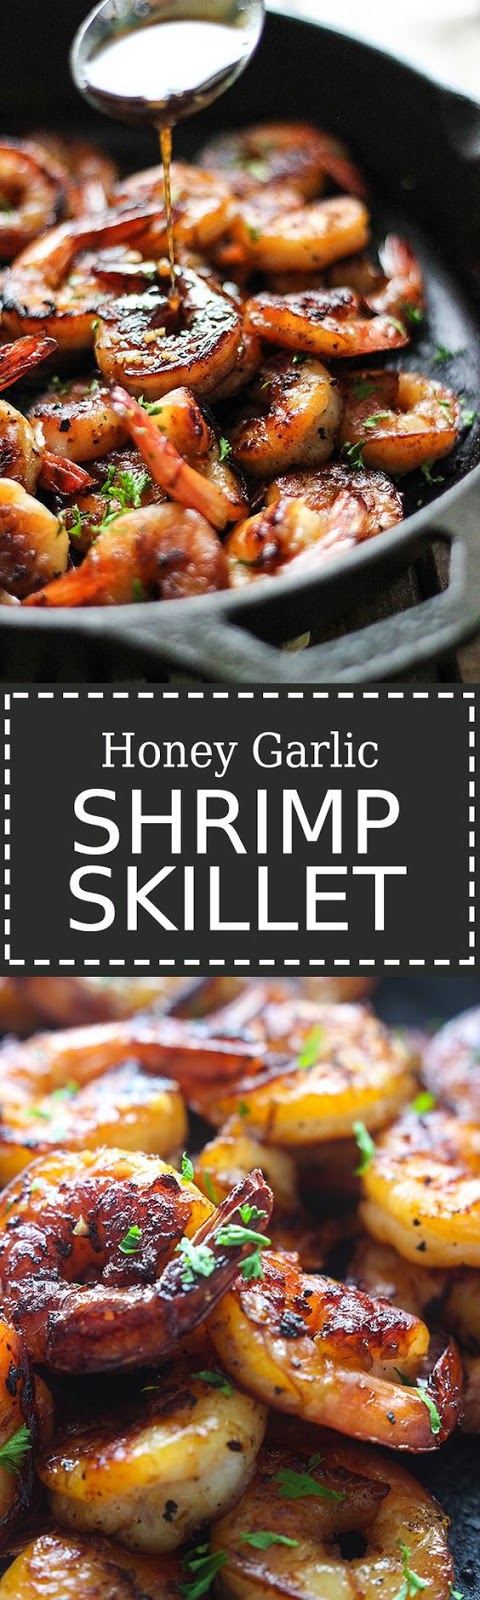 HONEY GARLIC SHRIMP SKILLET - yummy and foodie